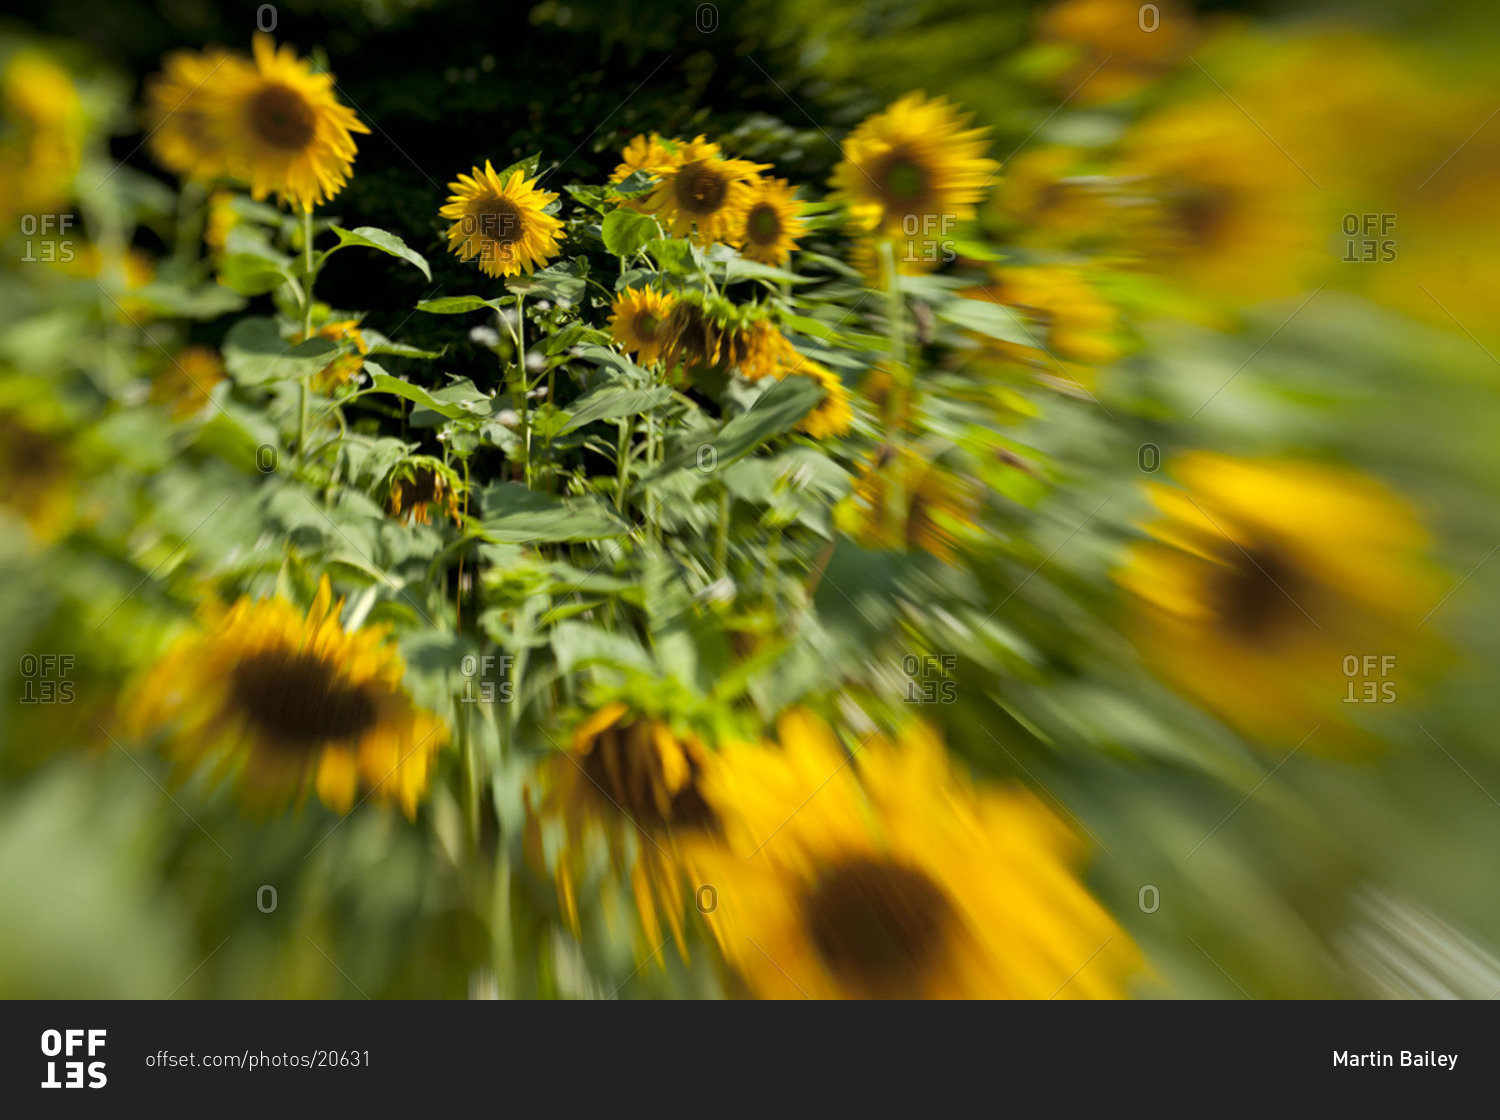 Blurred line of sunny sunflowers